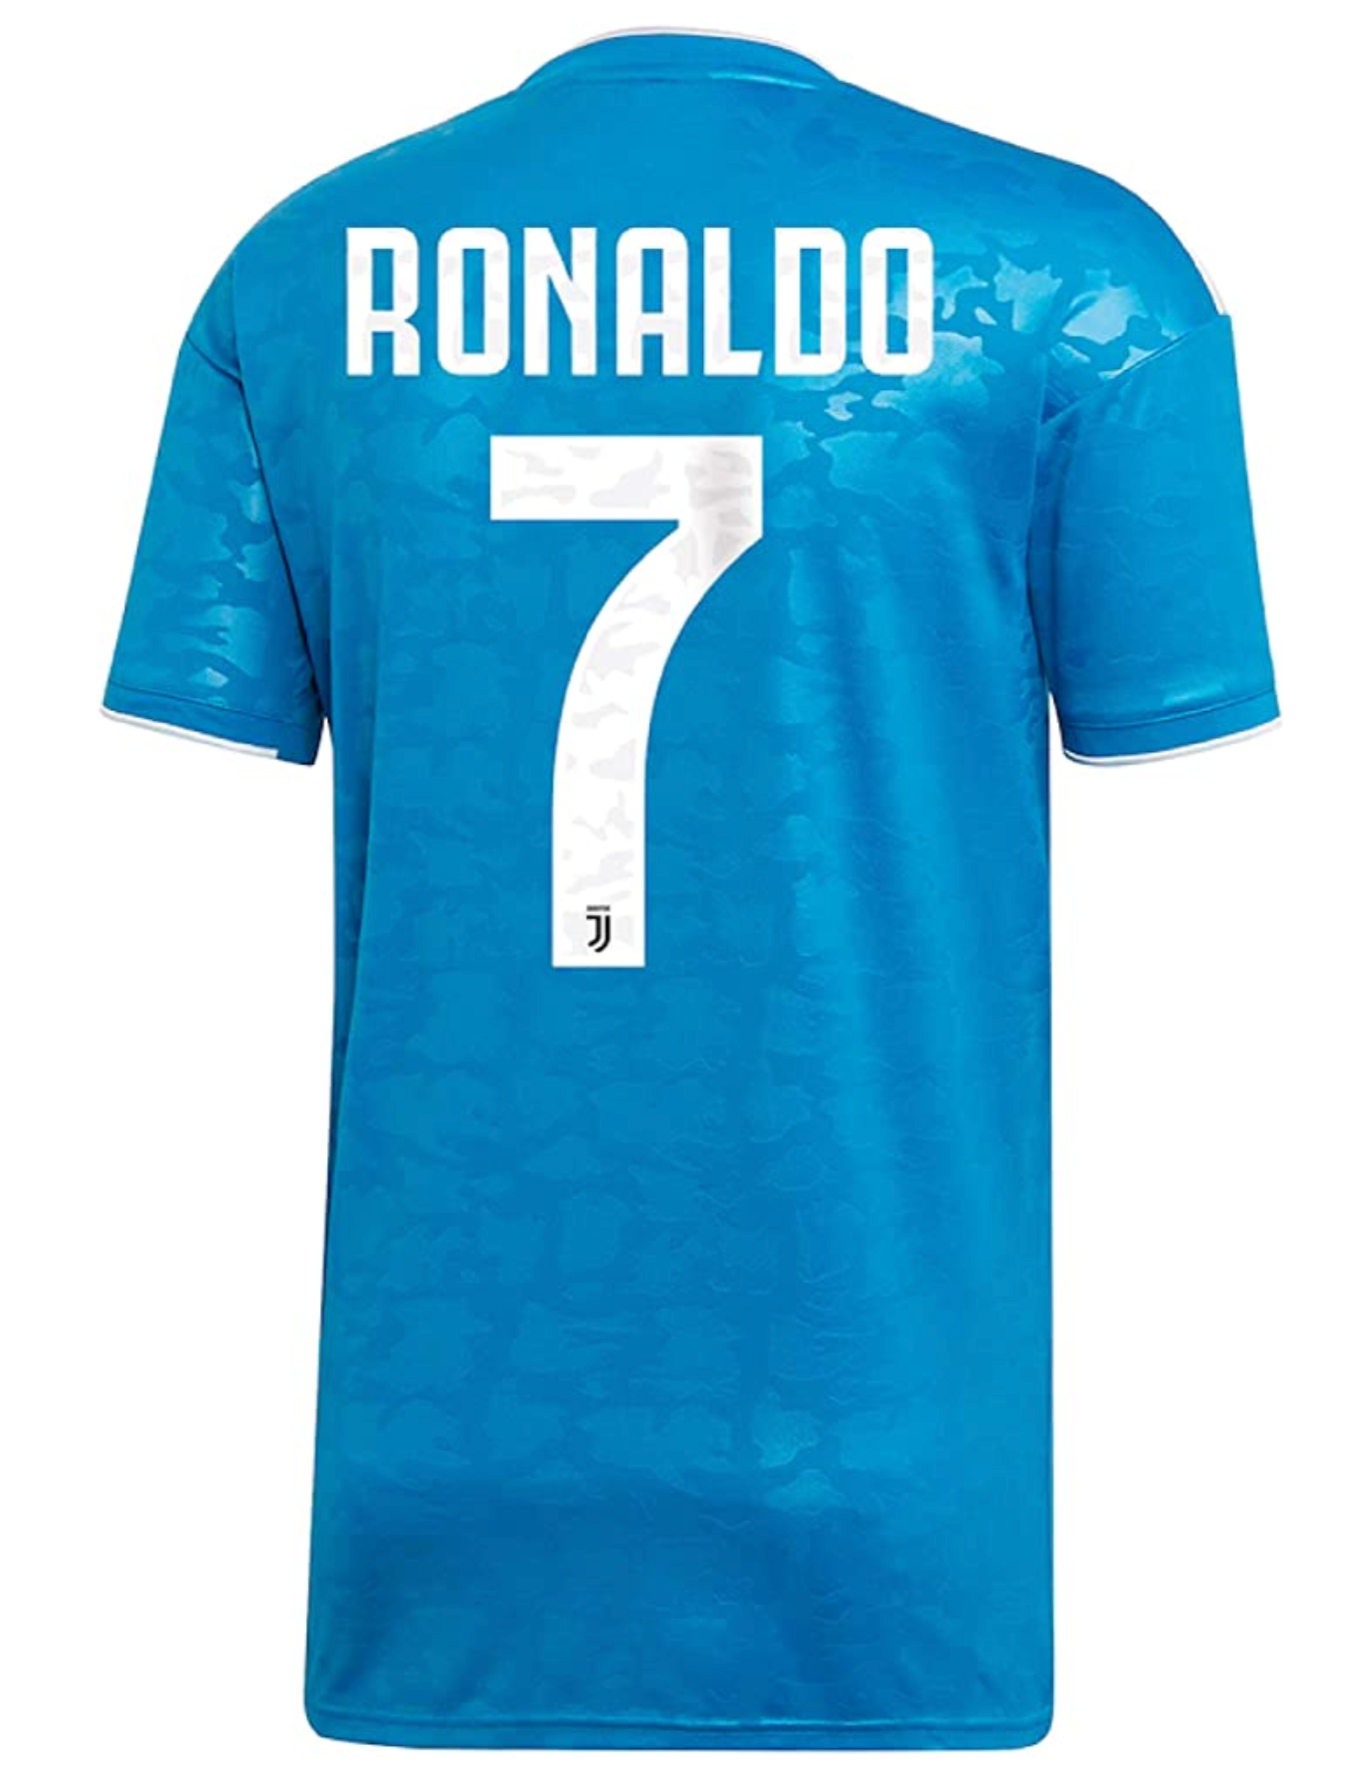 cristiano ronaldo blue jersey